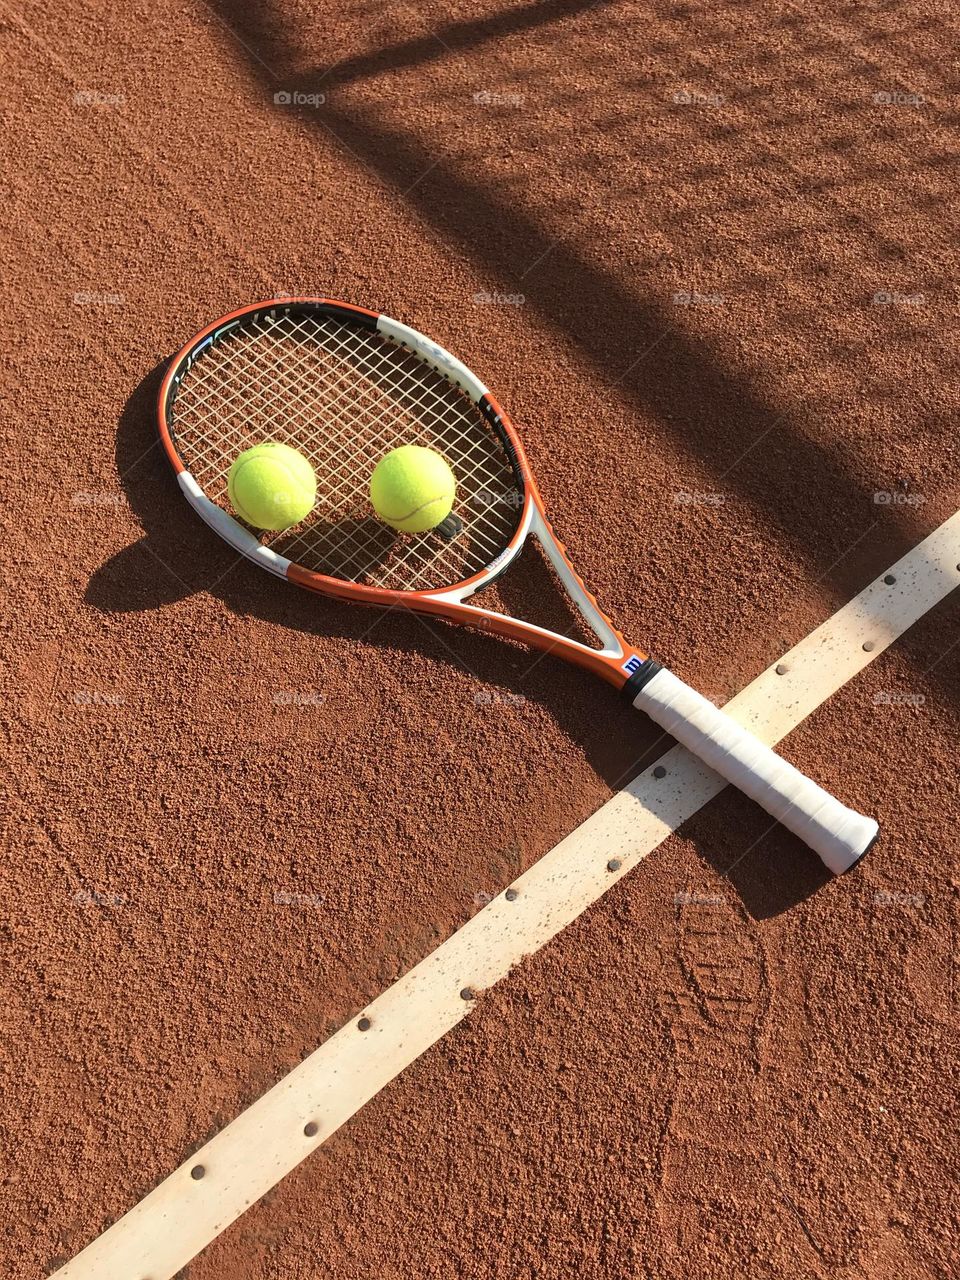 I love tennis.?❤️